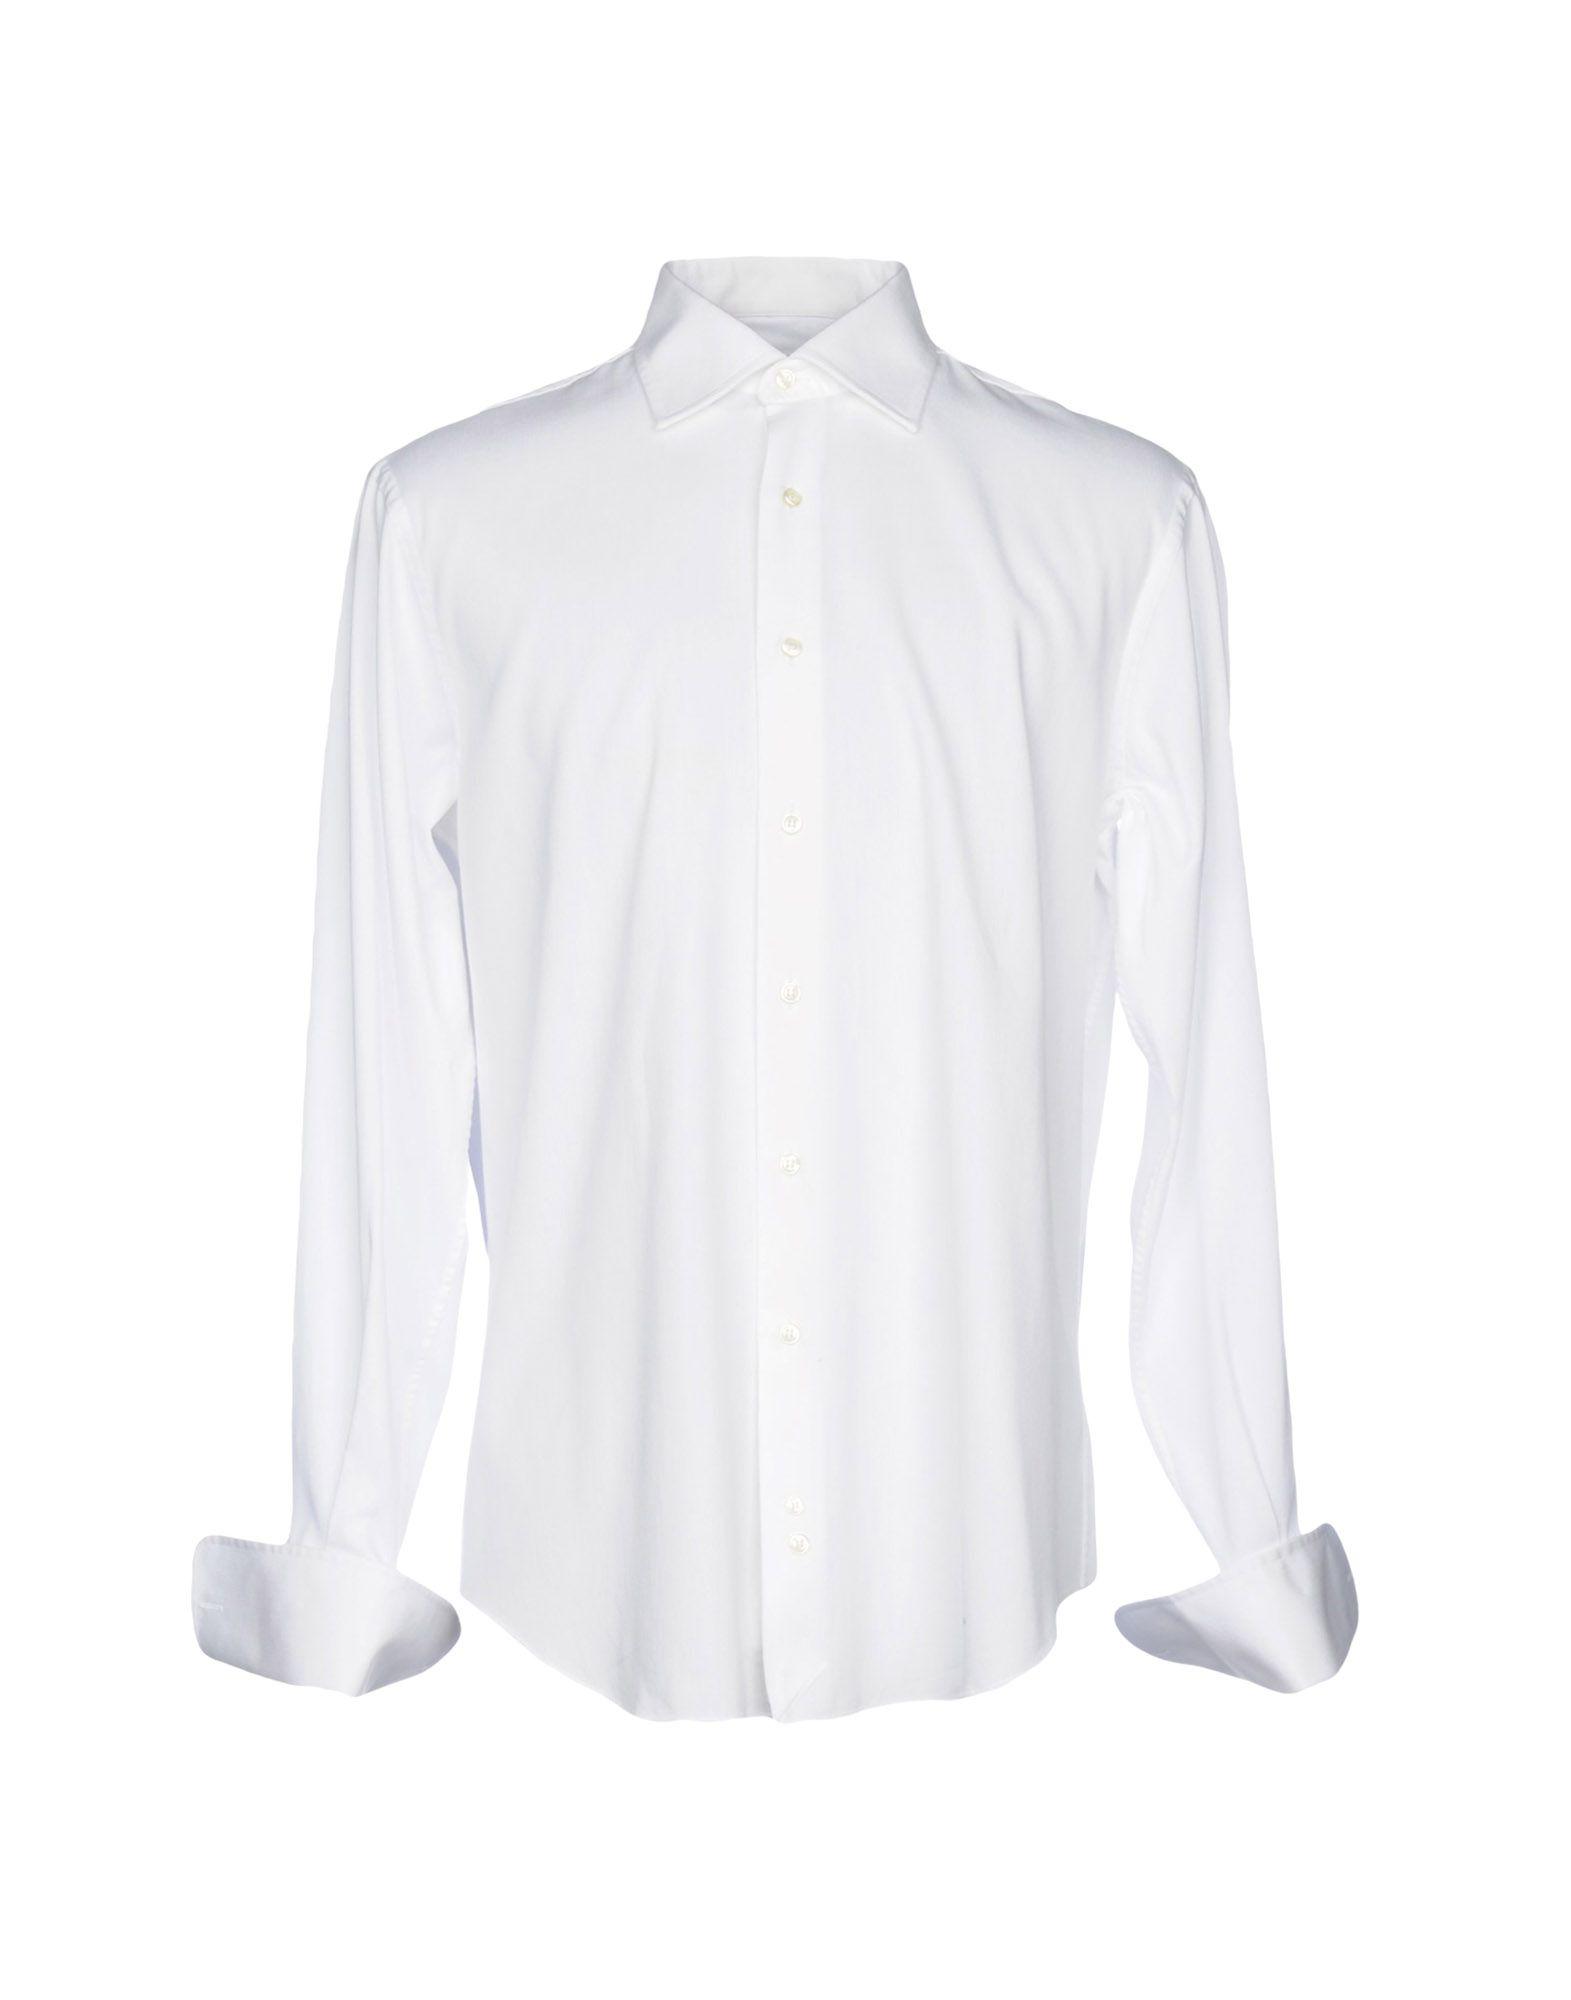 burberry plain white shirt